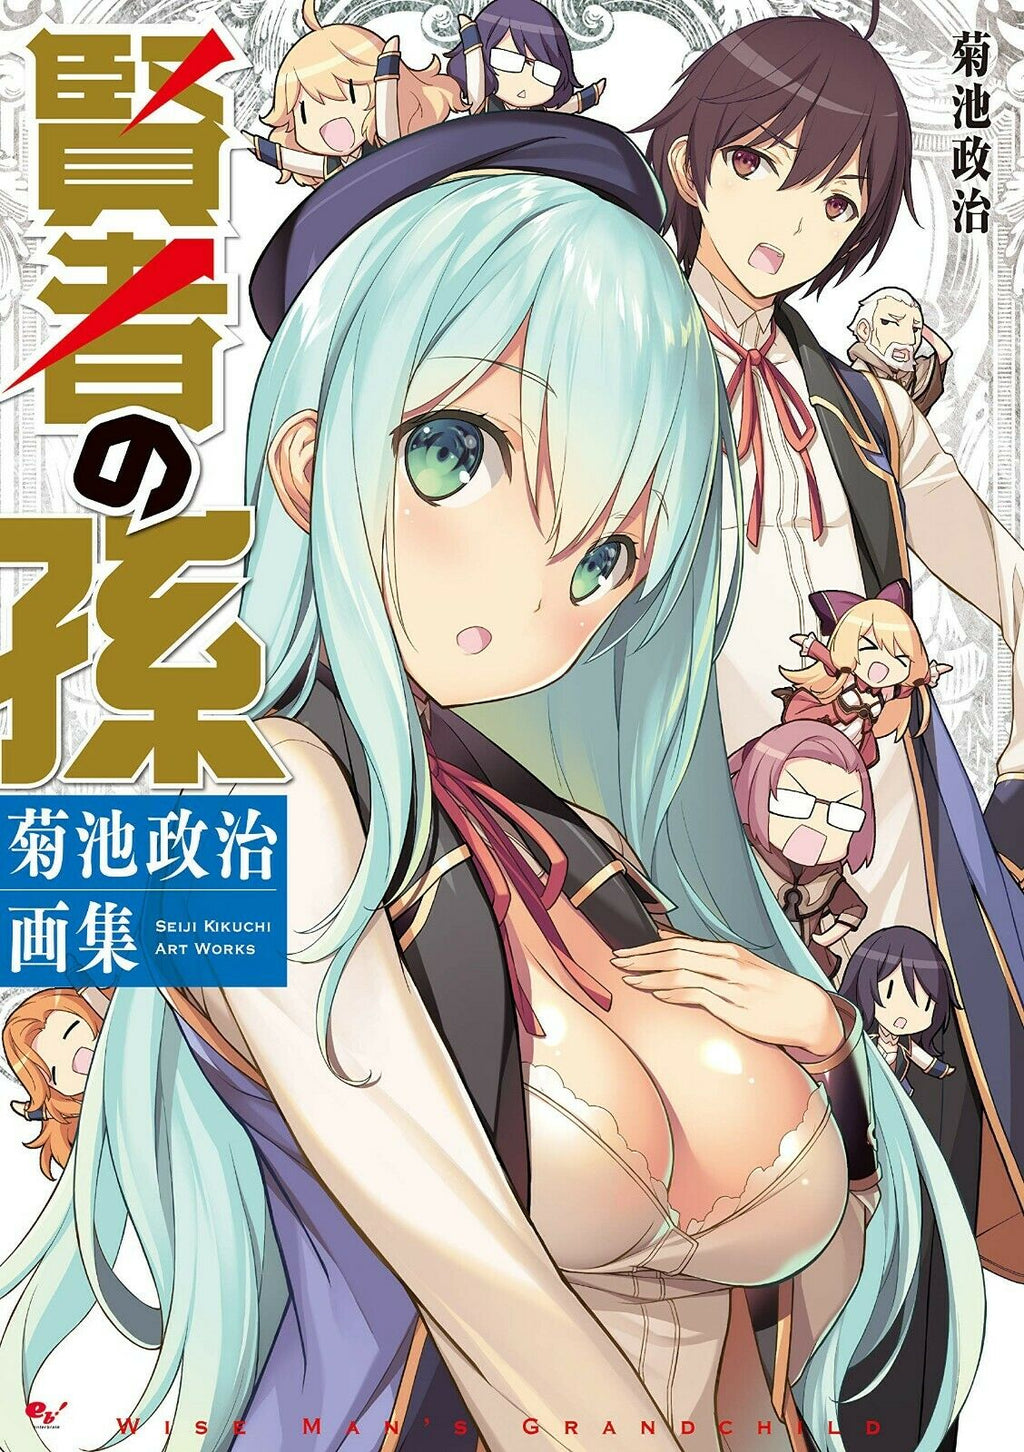 NEW Kenja no Mago SEIJI KIKUCHI ARTWORKS | JAPAN Anime Manga Art Book